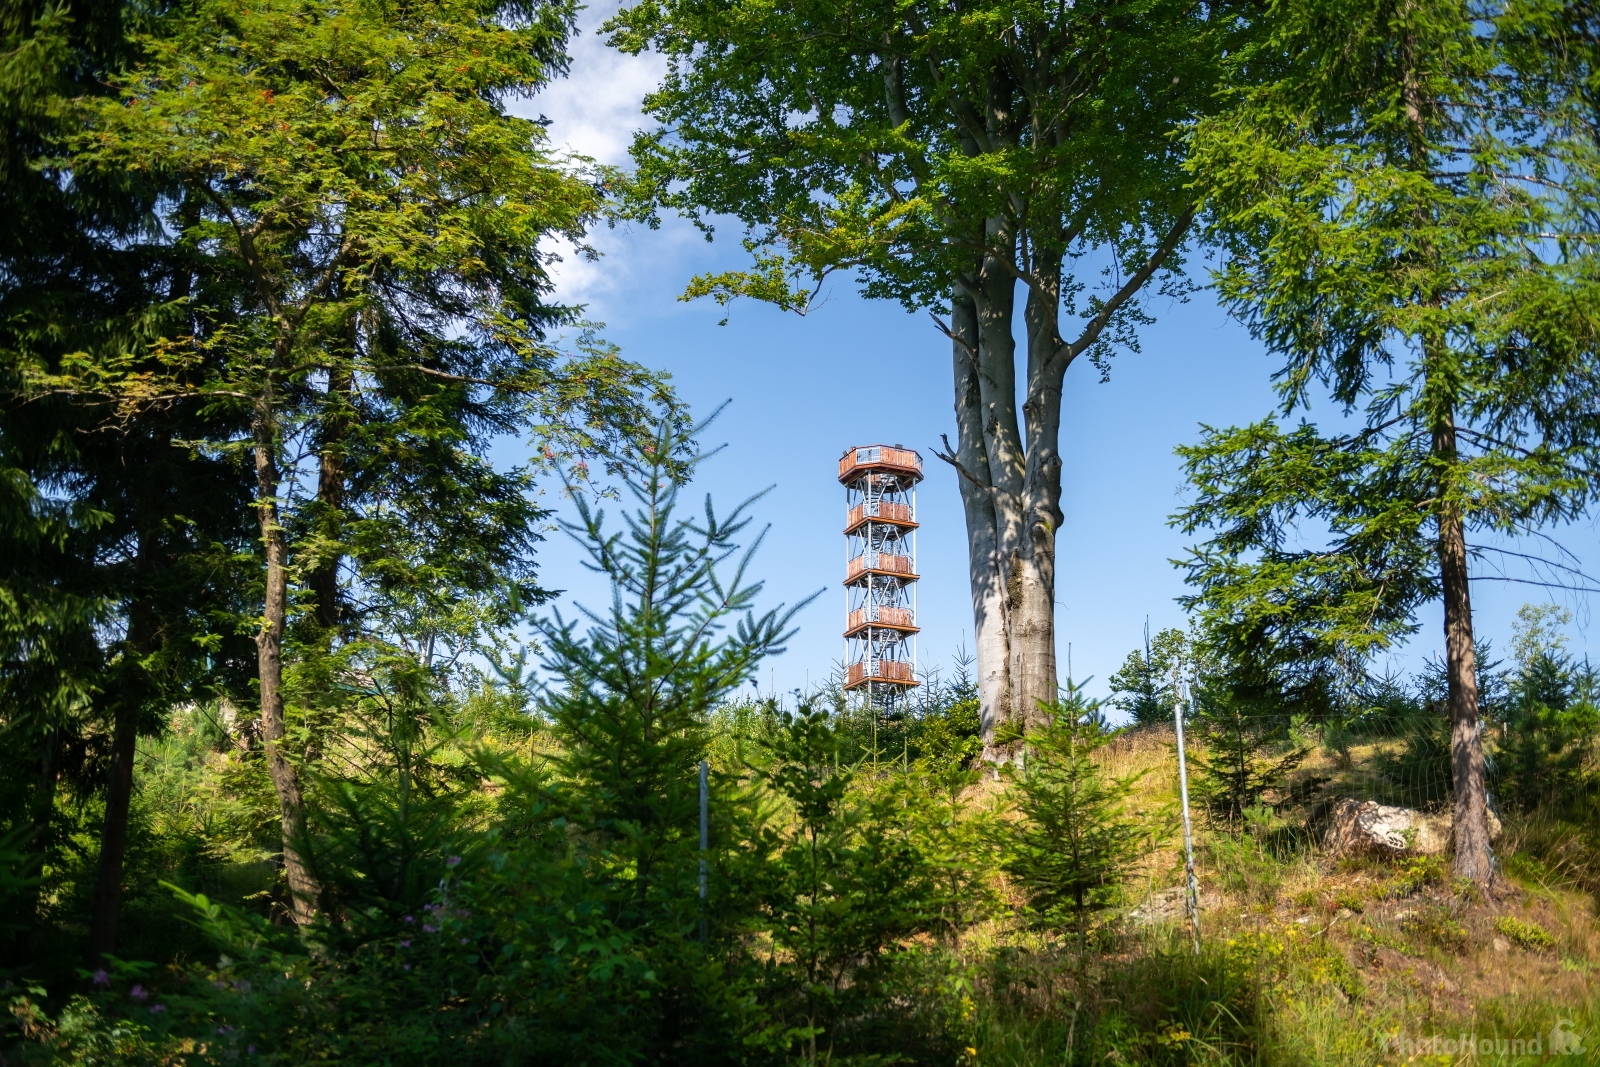 Image of Feistův kopec lookout tower by VOJTa Herout